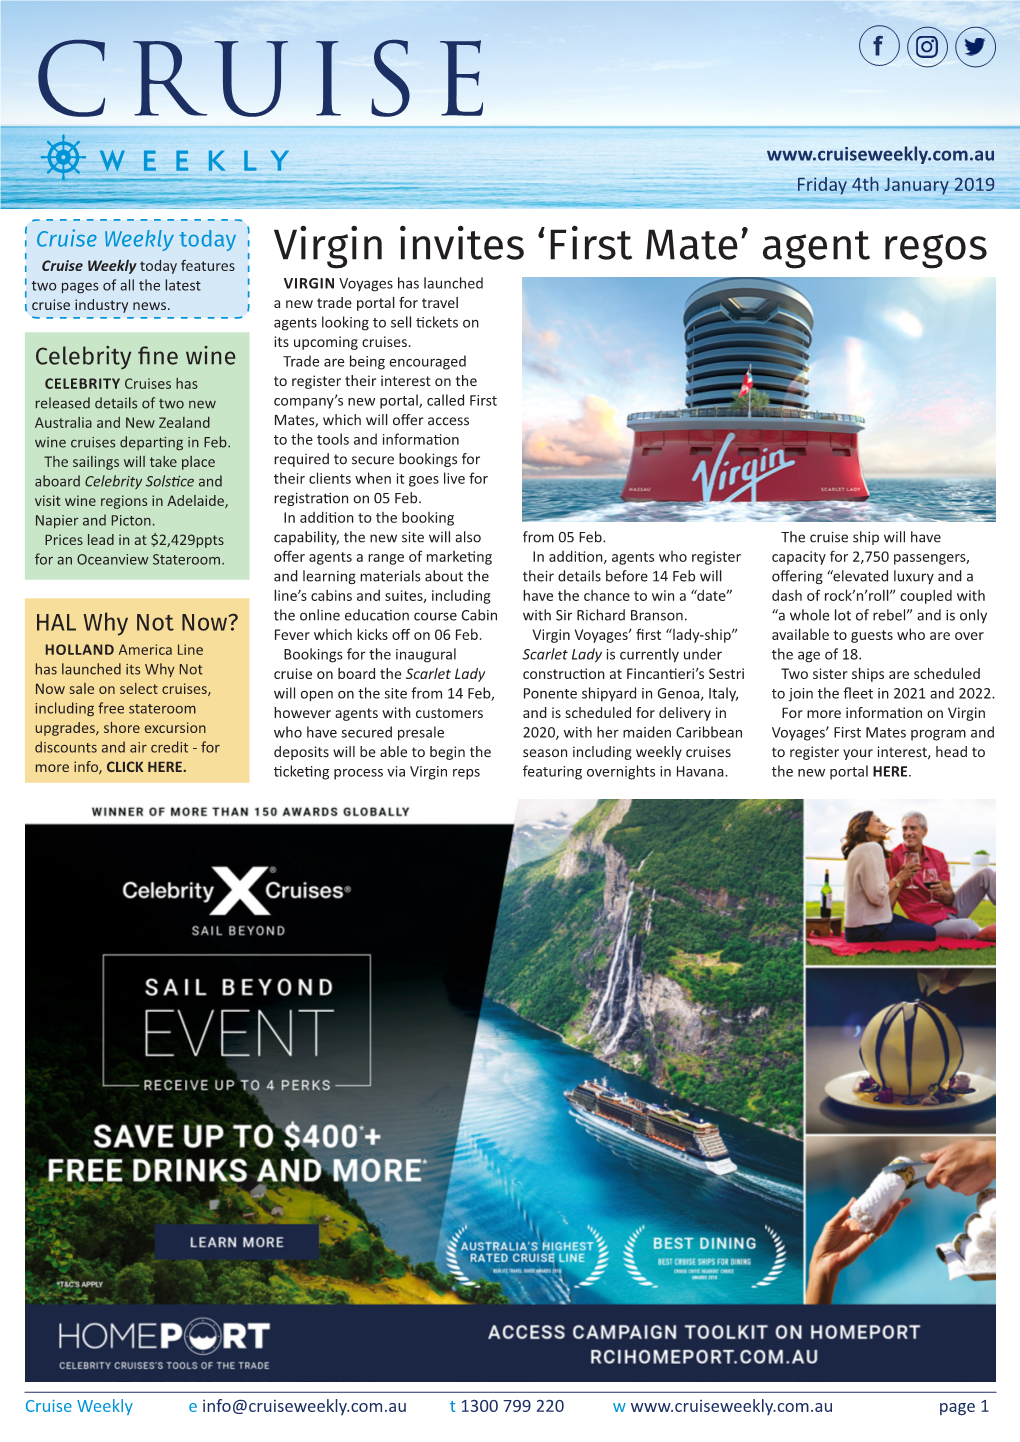 Virgin Invites 'First Mate' Agent Regos